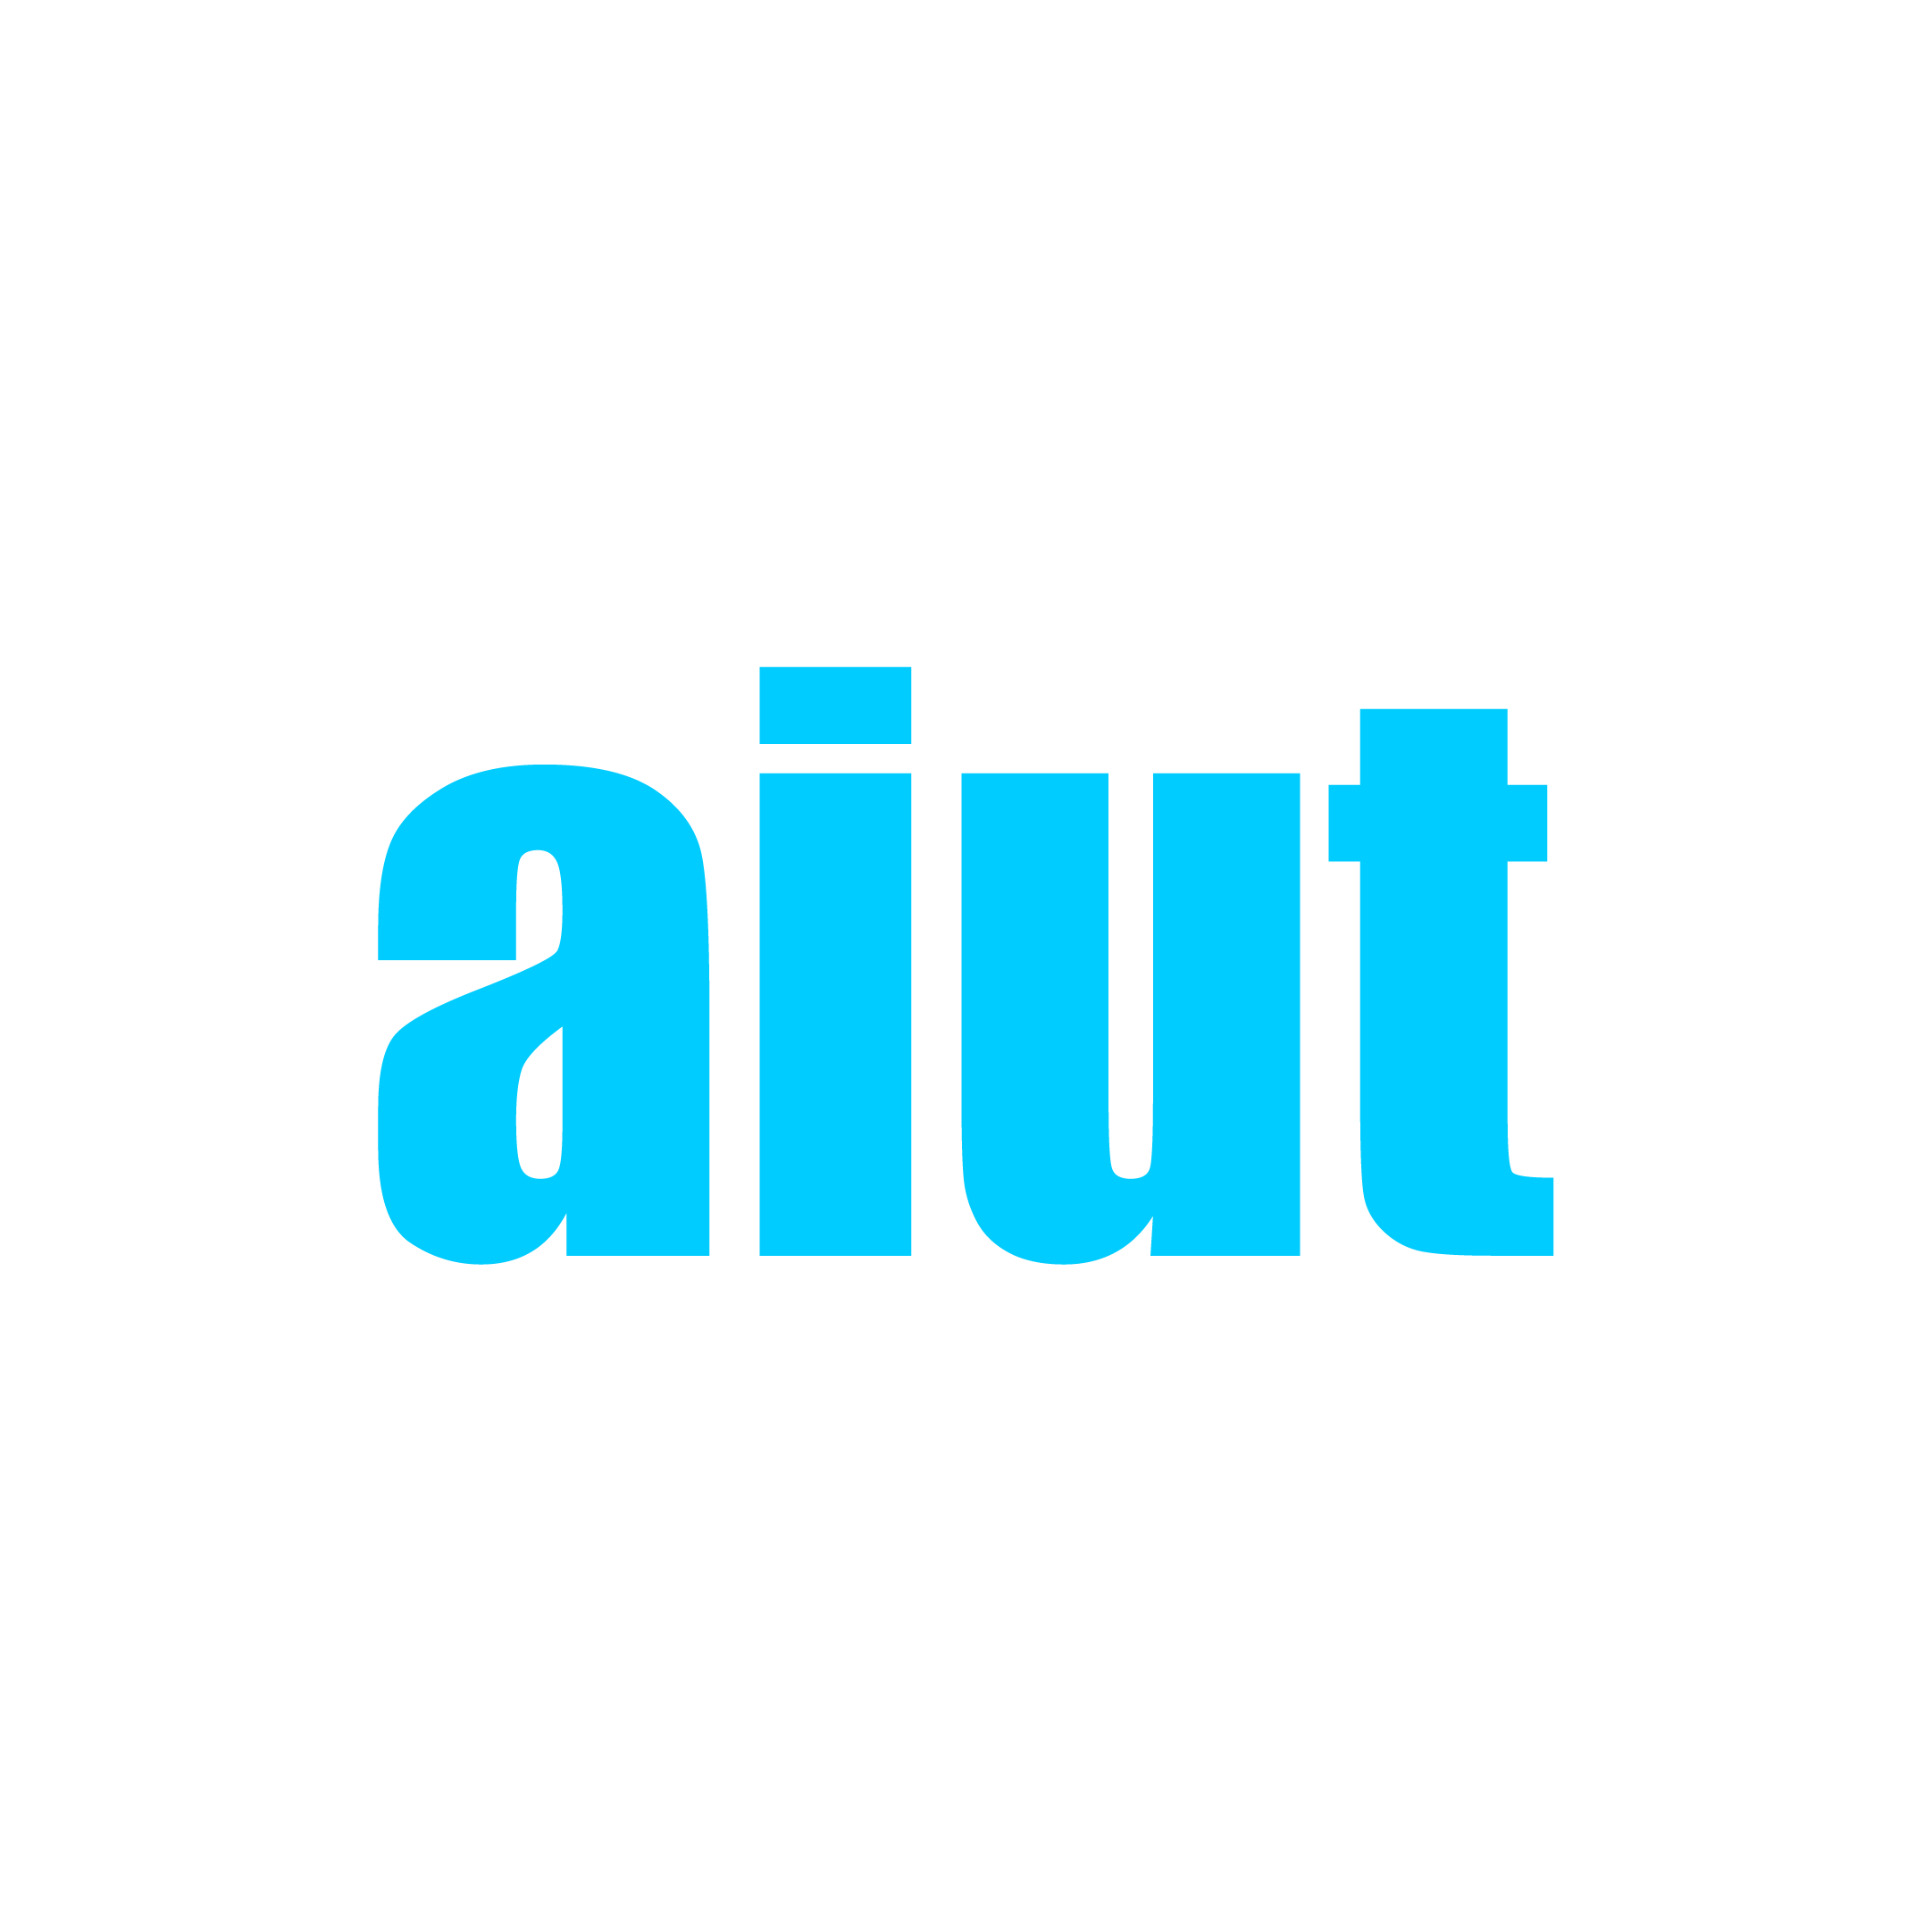 Logo firmy AIUT